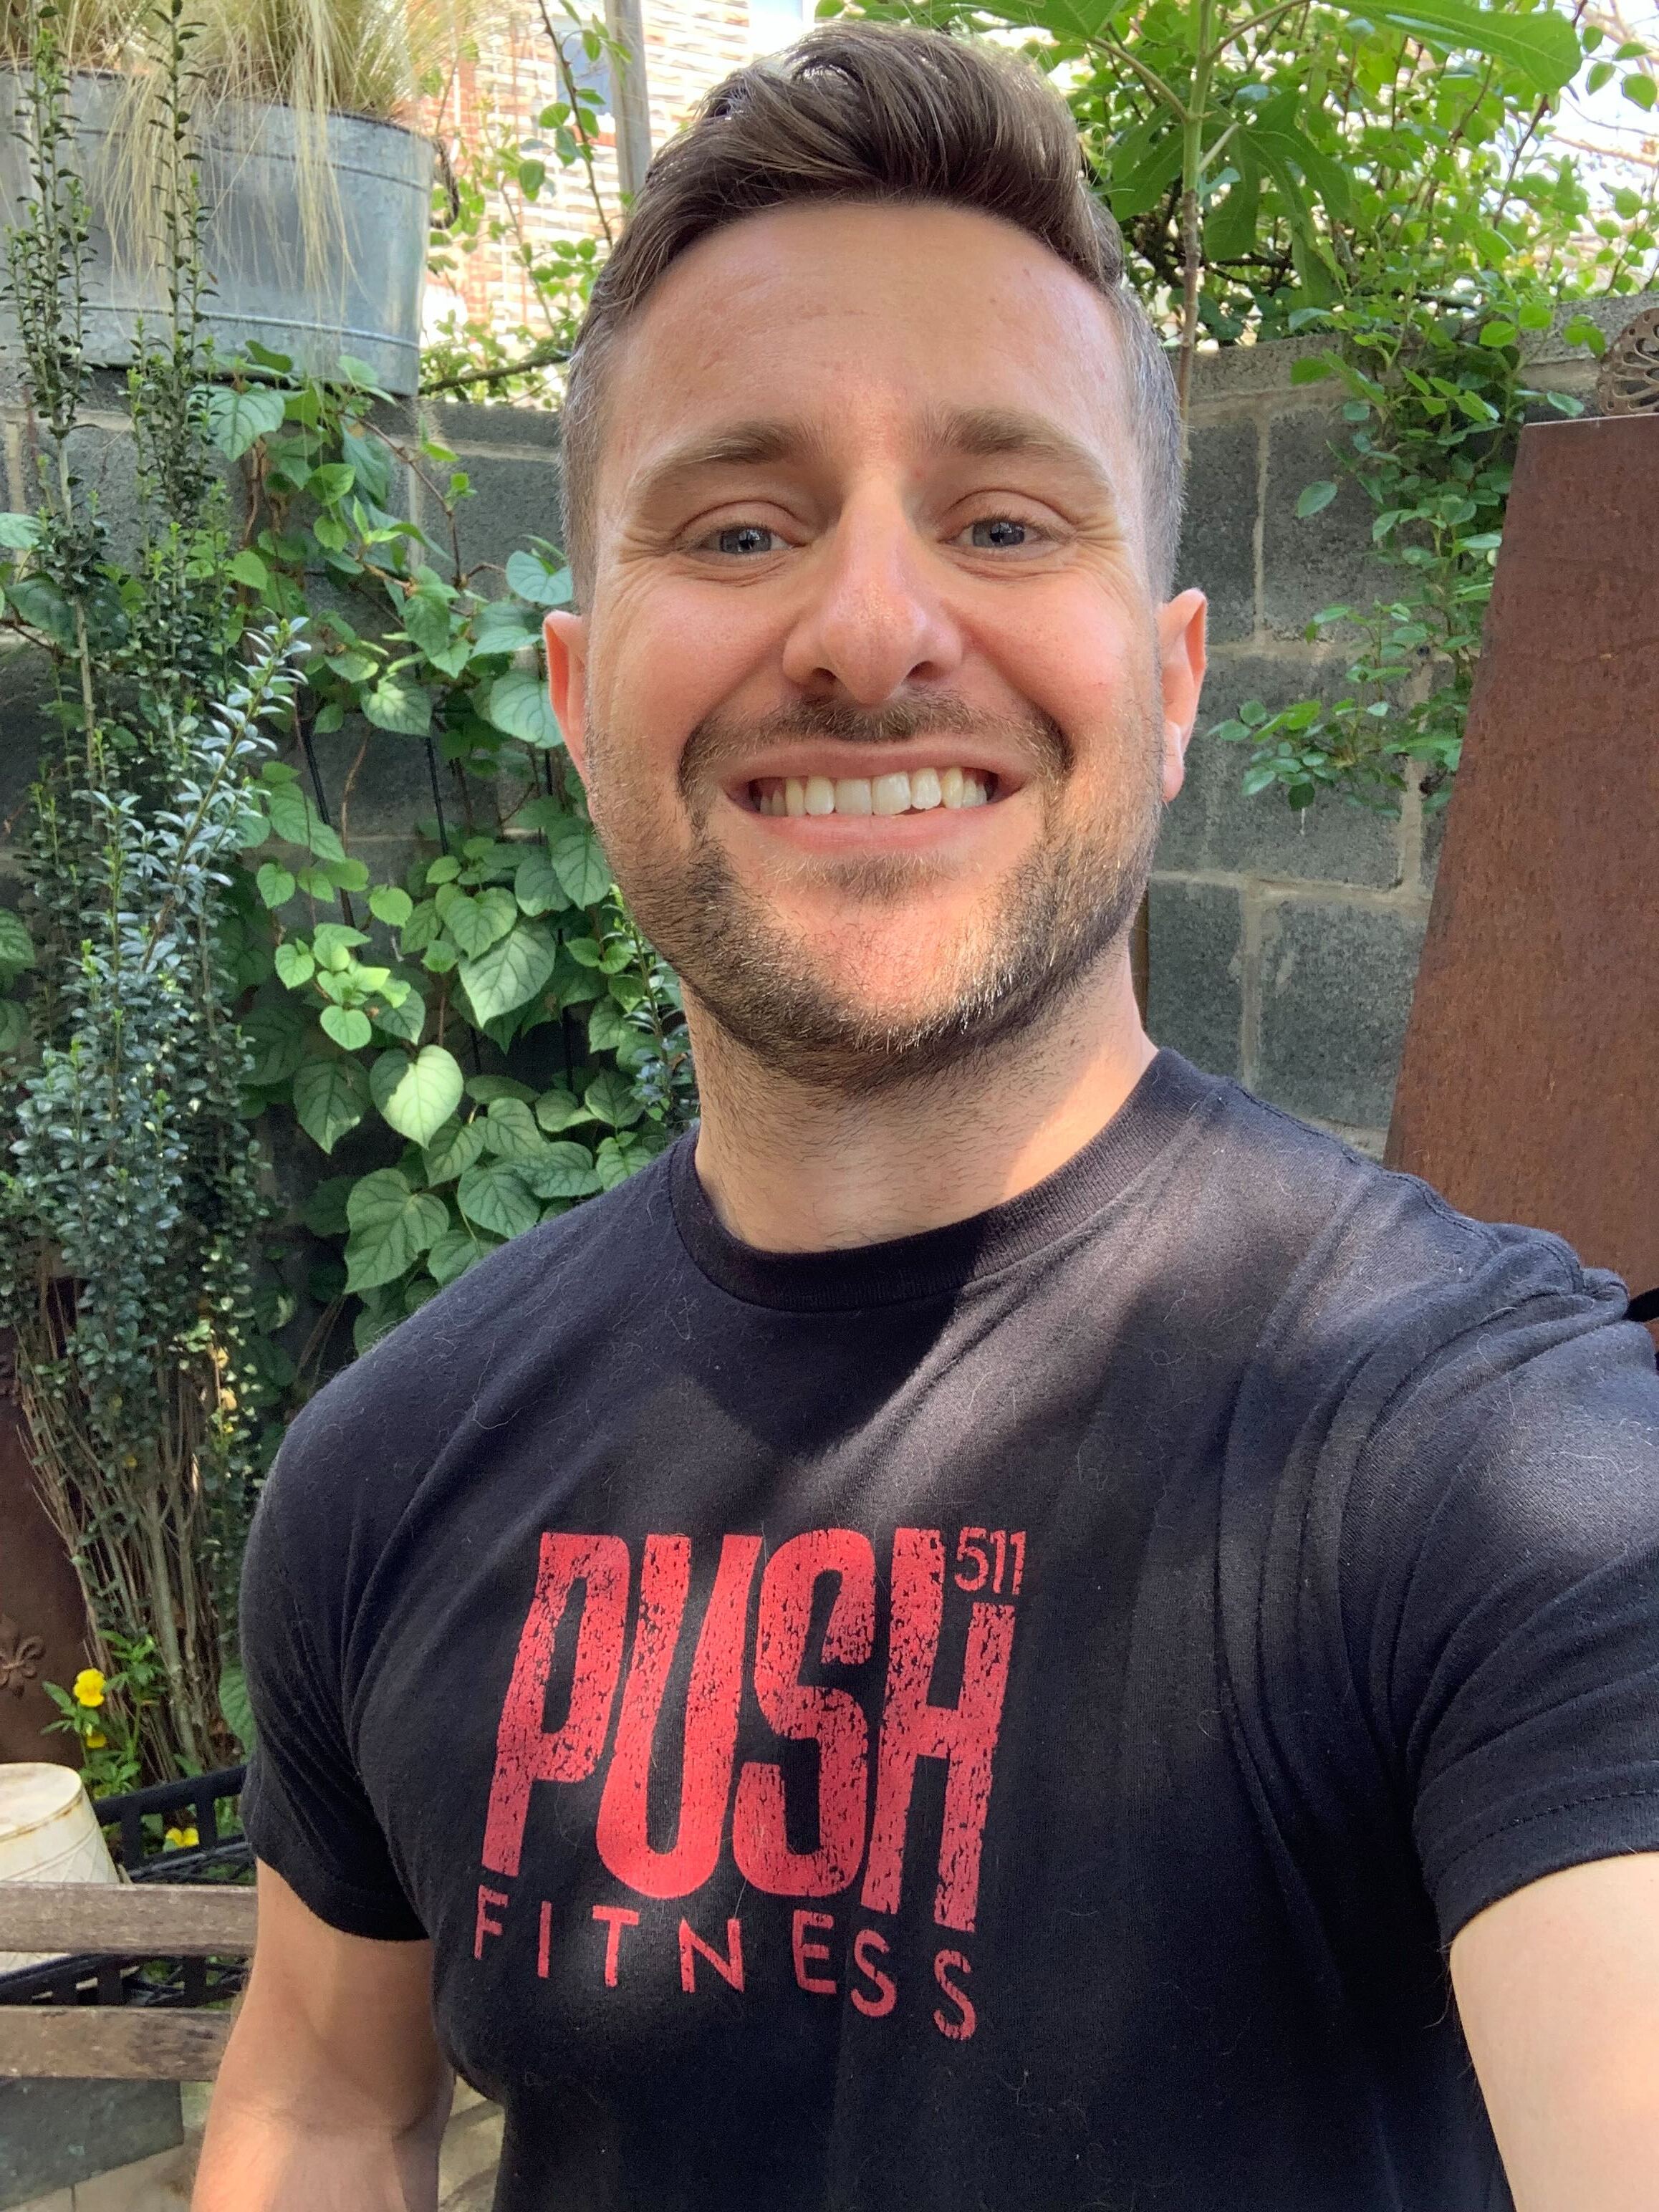 PUSH511 - Baltimore CrossFit Training